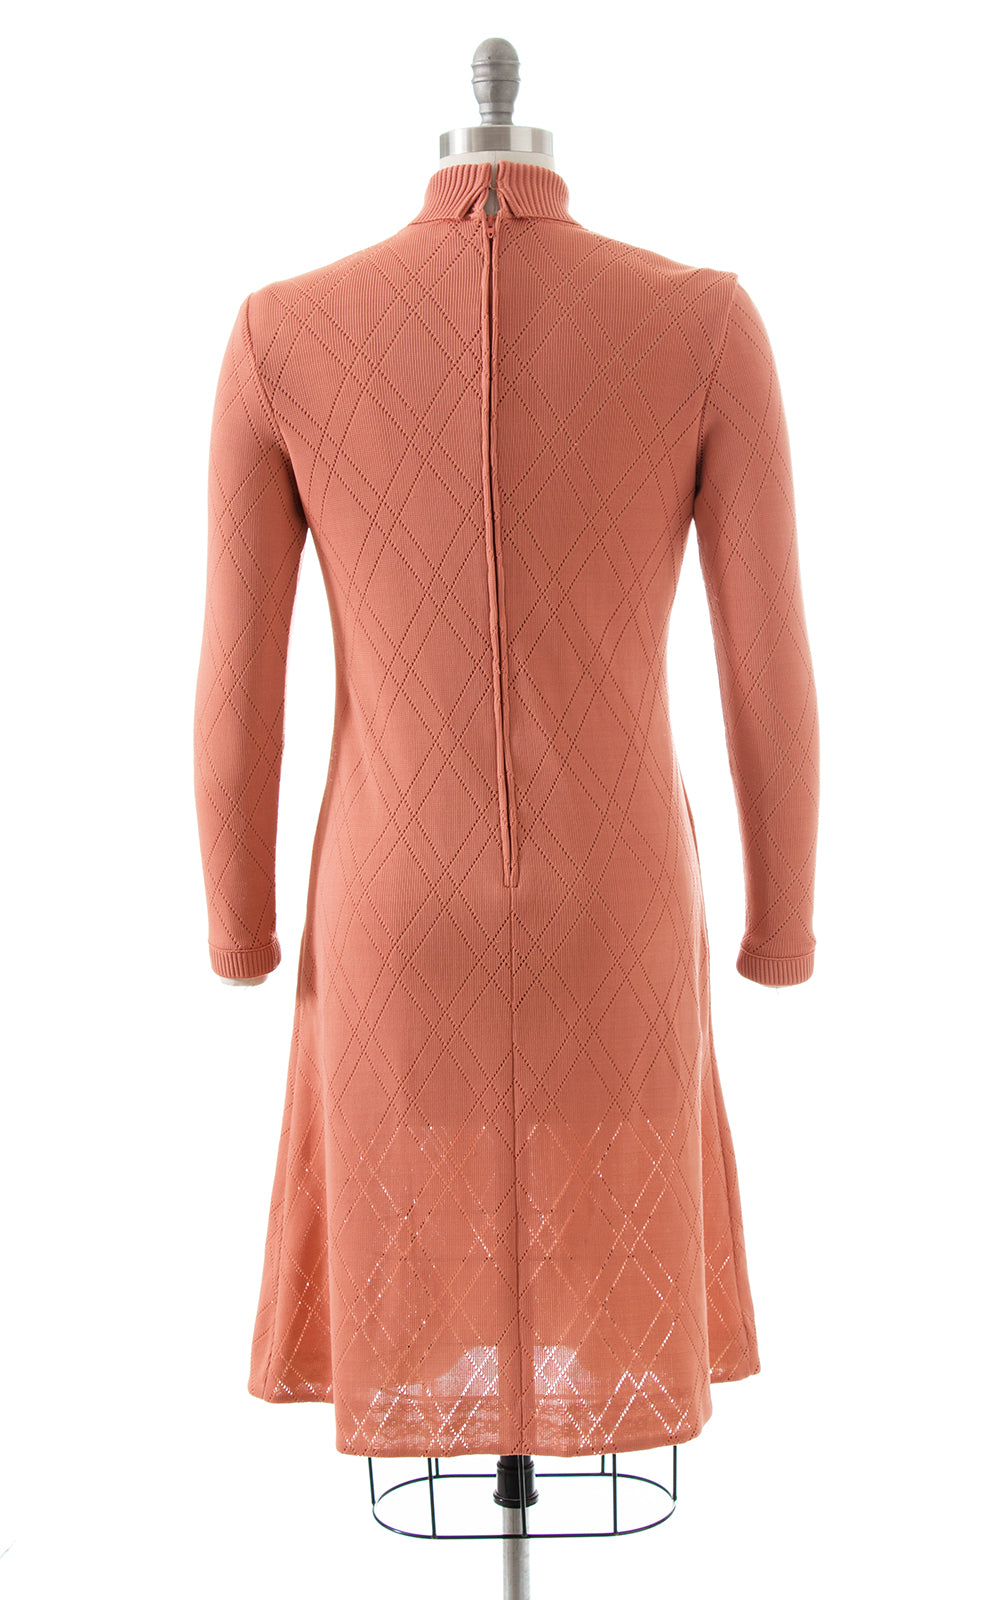 1970s Knit Turtleneck Sweater Dress